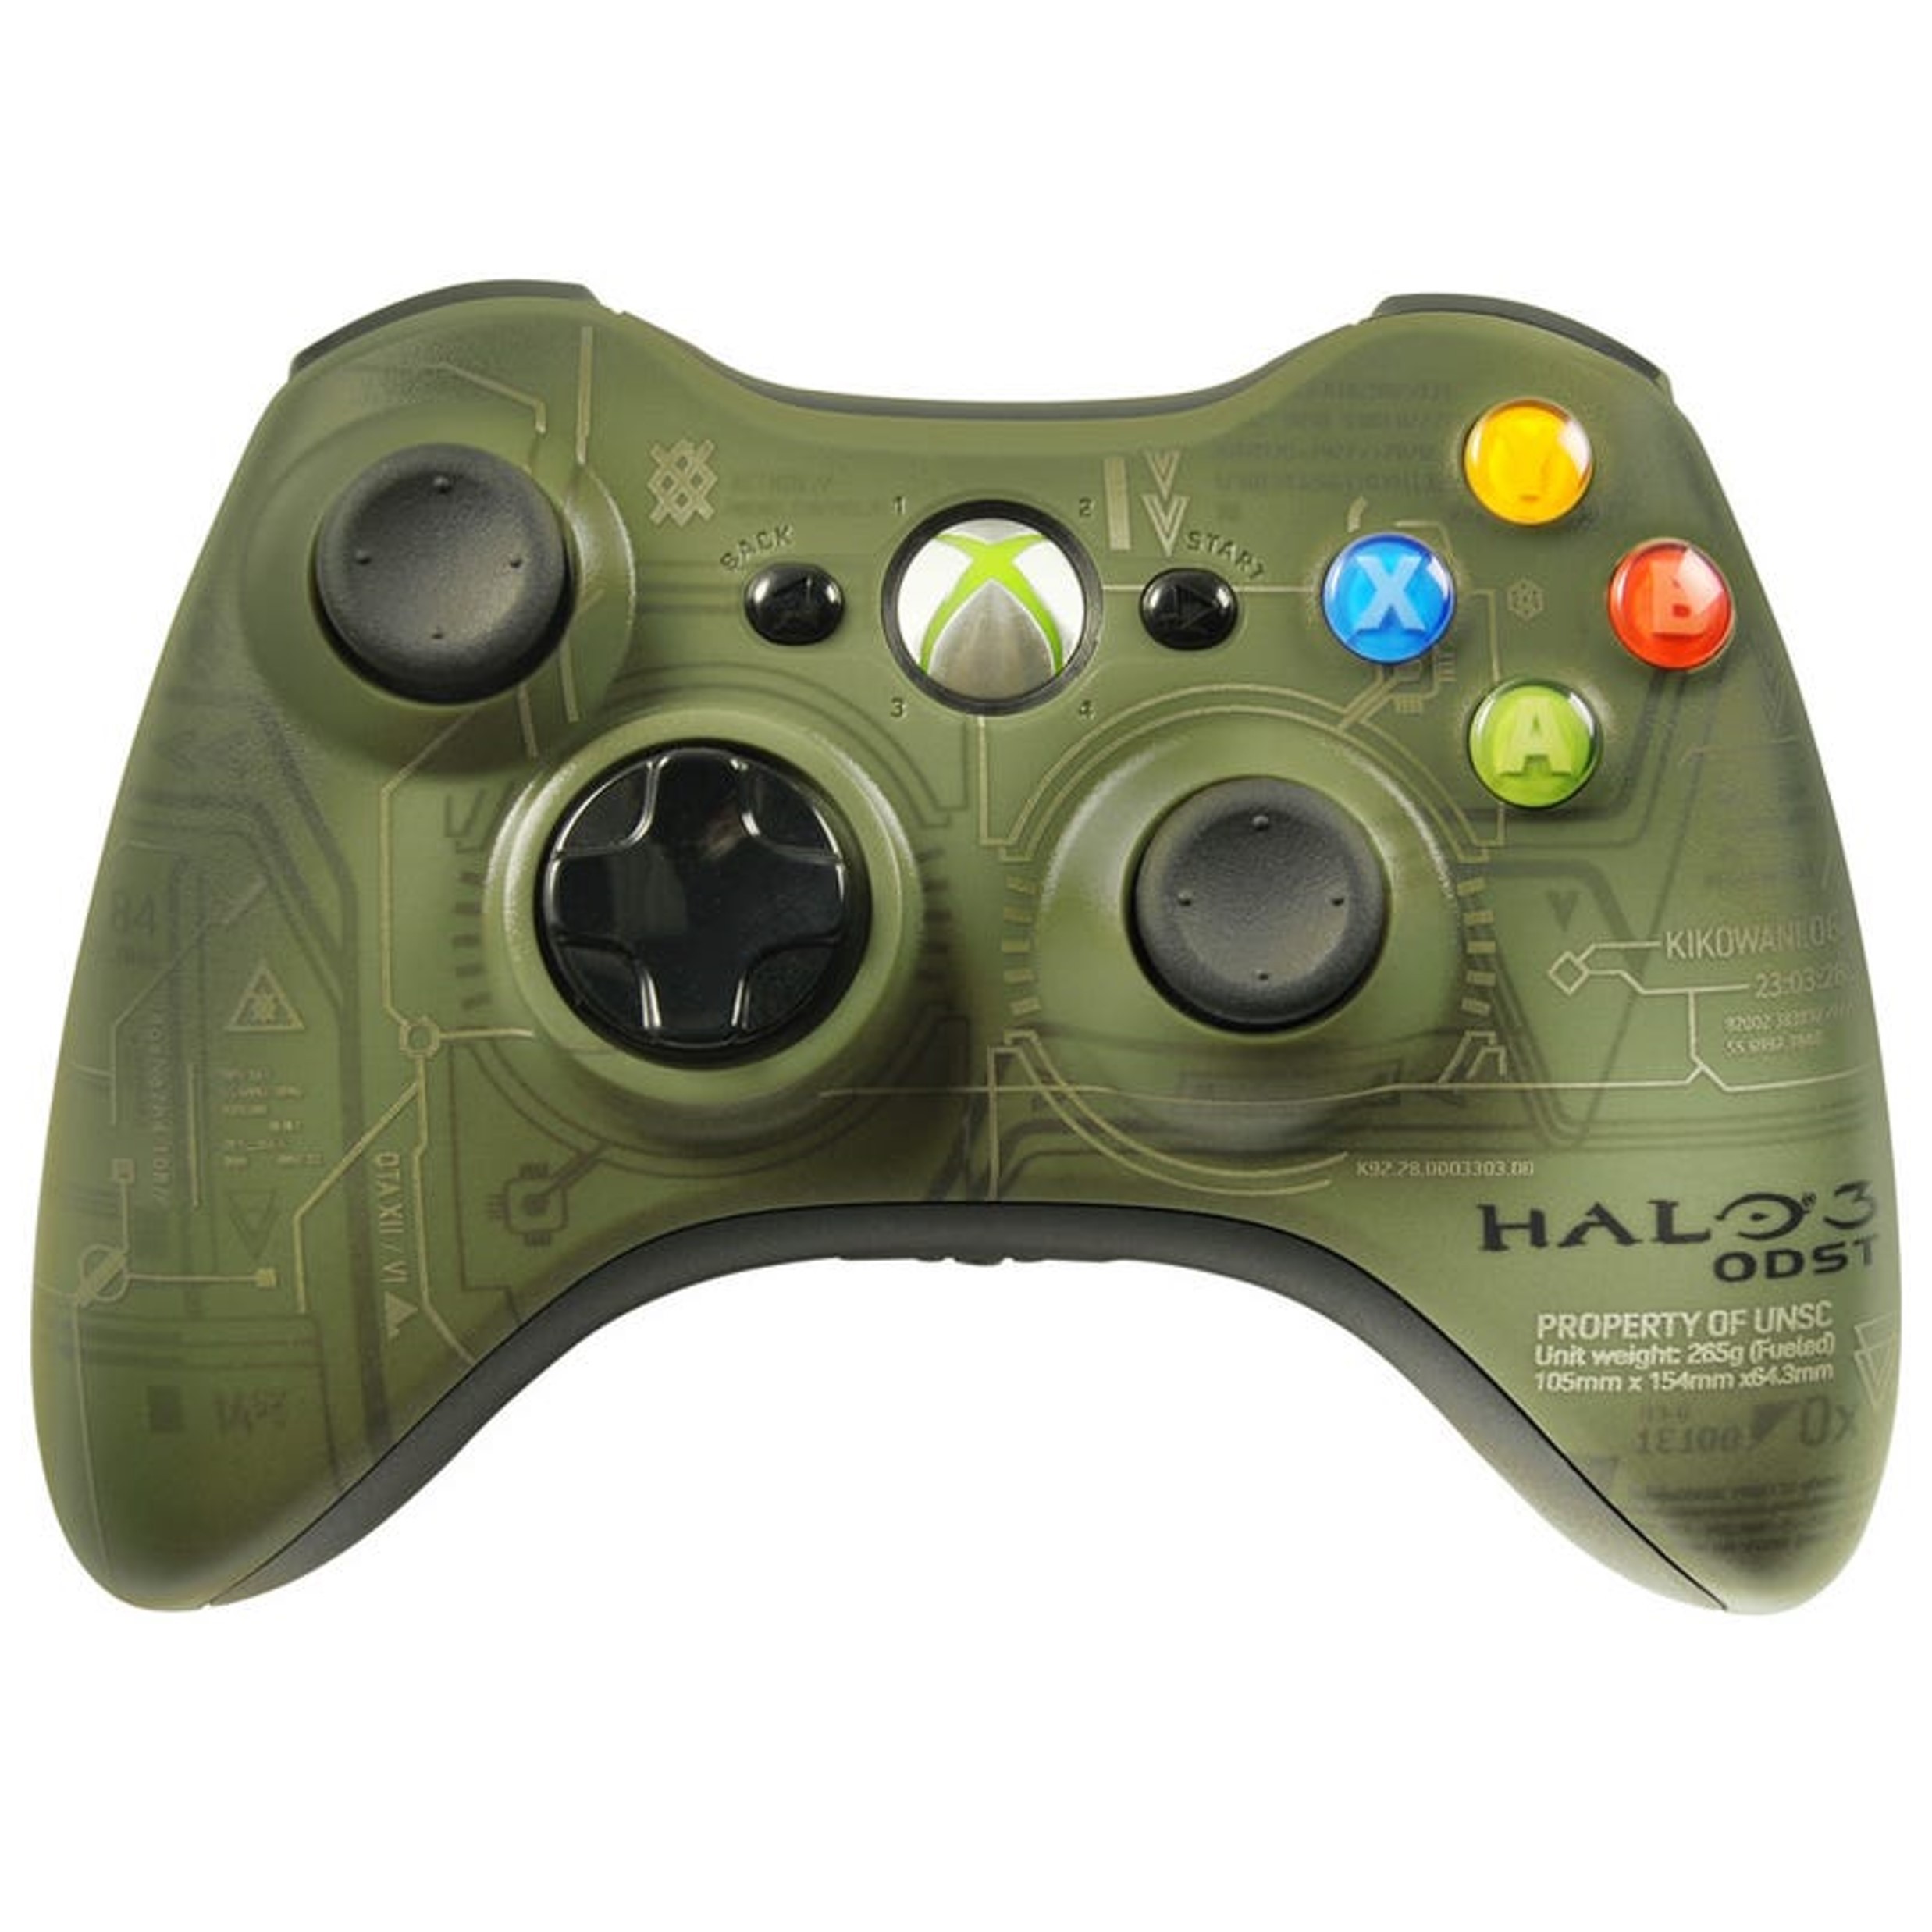 Microsoft Xbox 360 Controller - Halo 3 ODST Edition - Xbox 360 Hardware